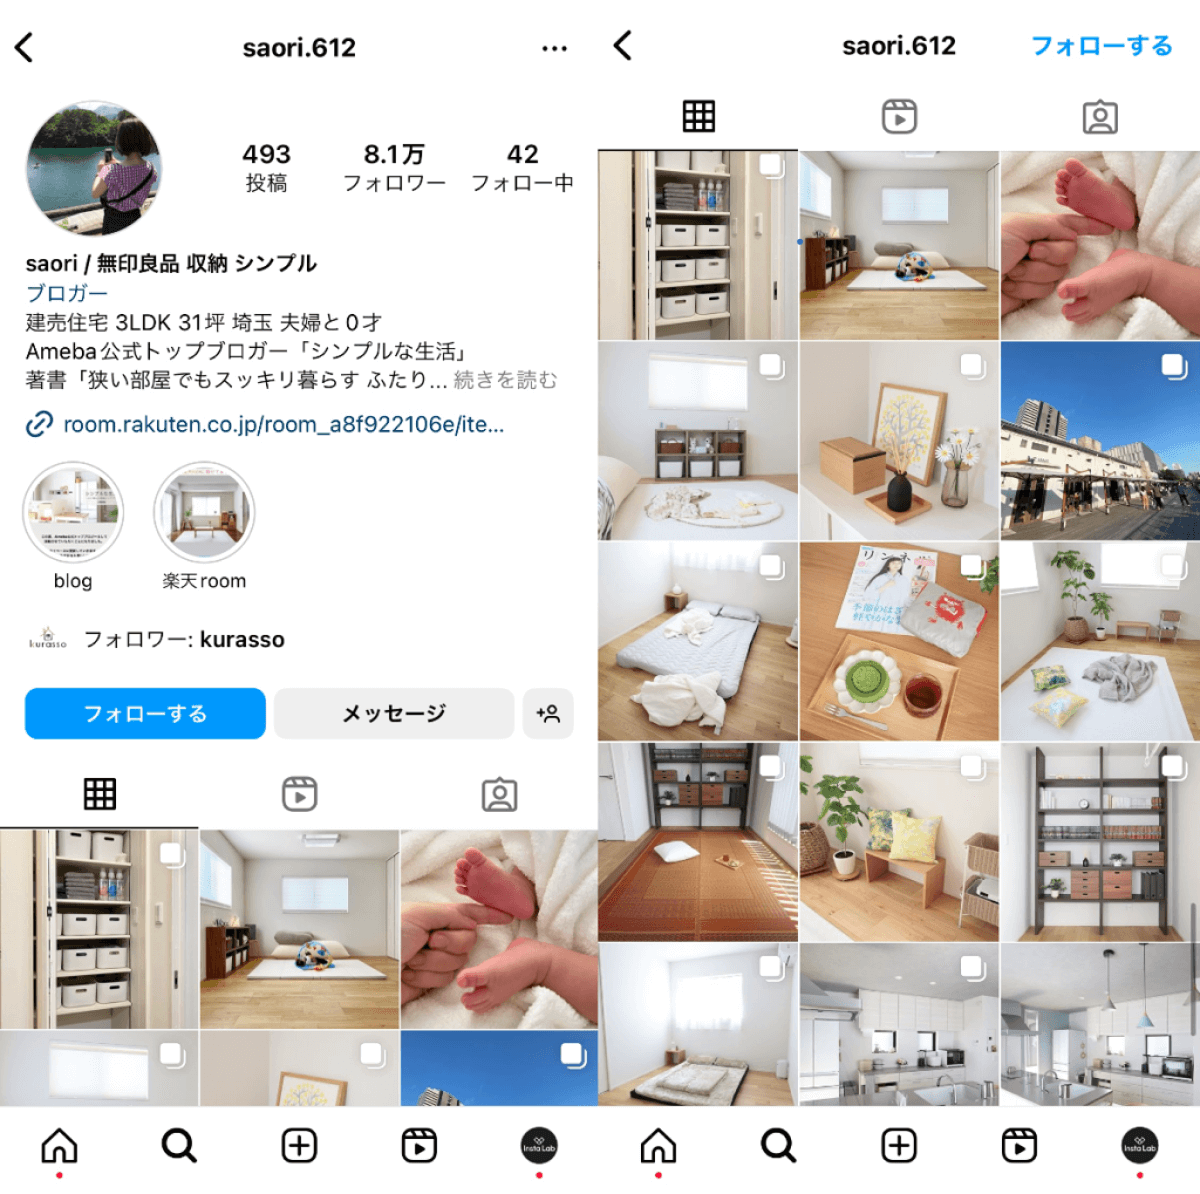 instagram-account-saori-612